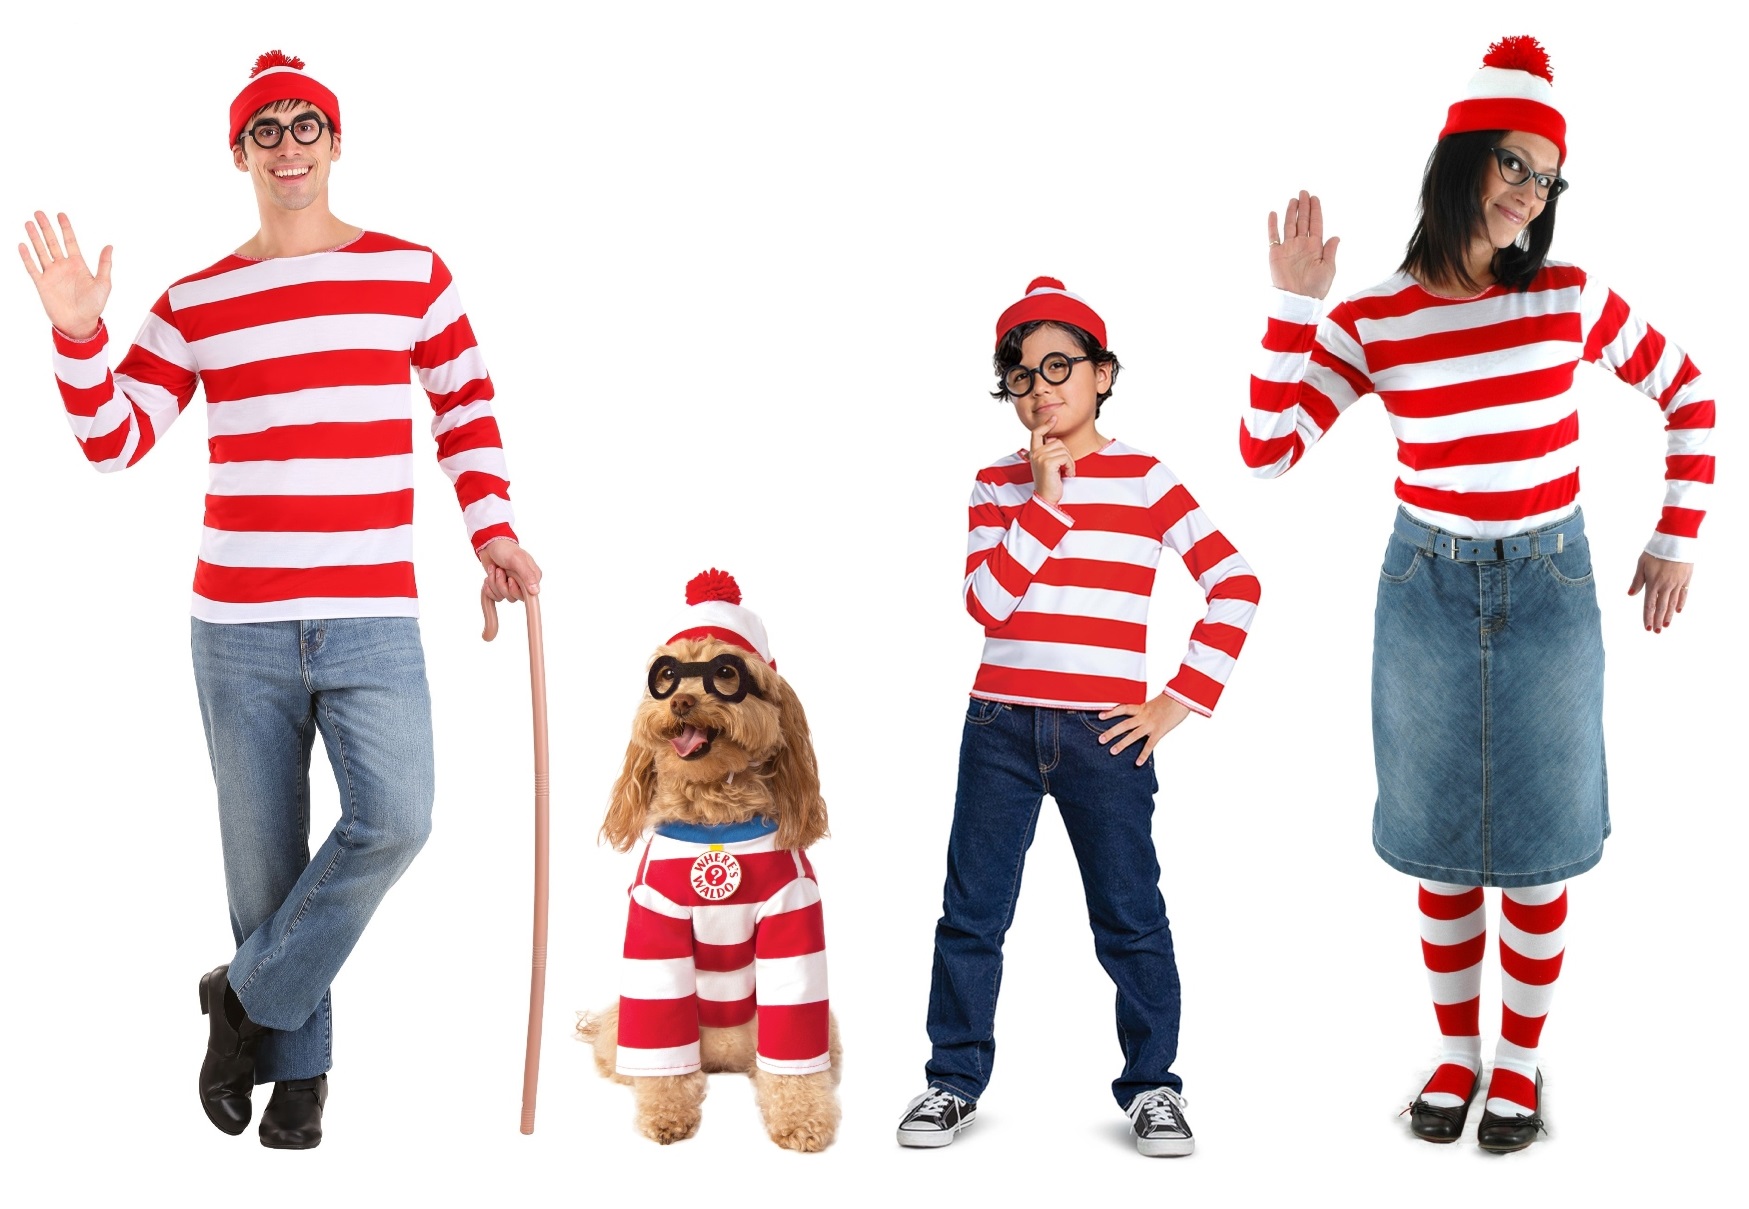 Waldo Costumes